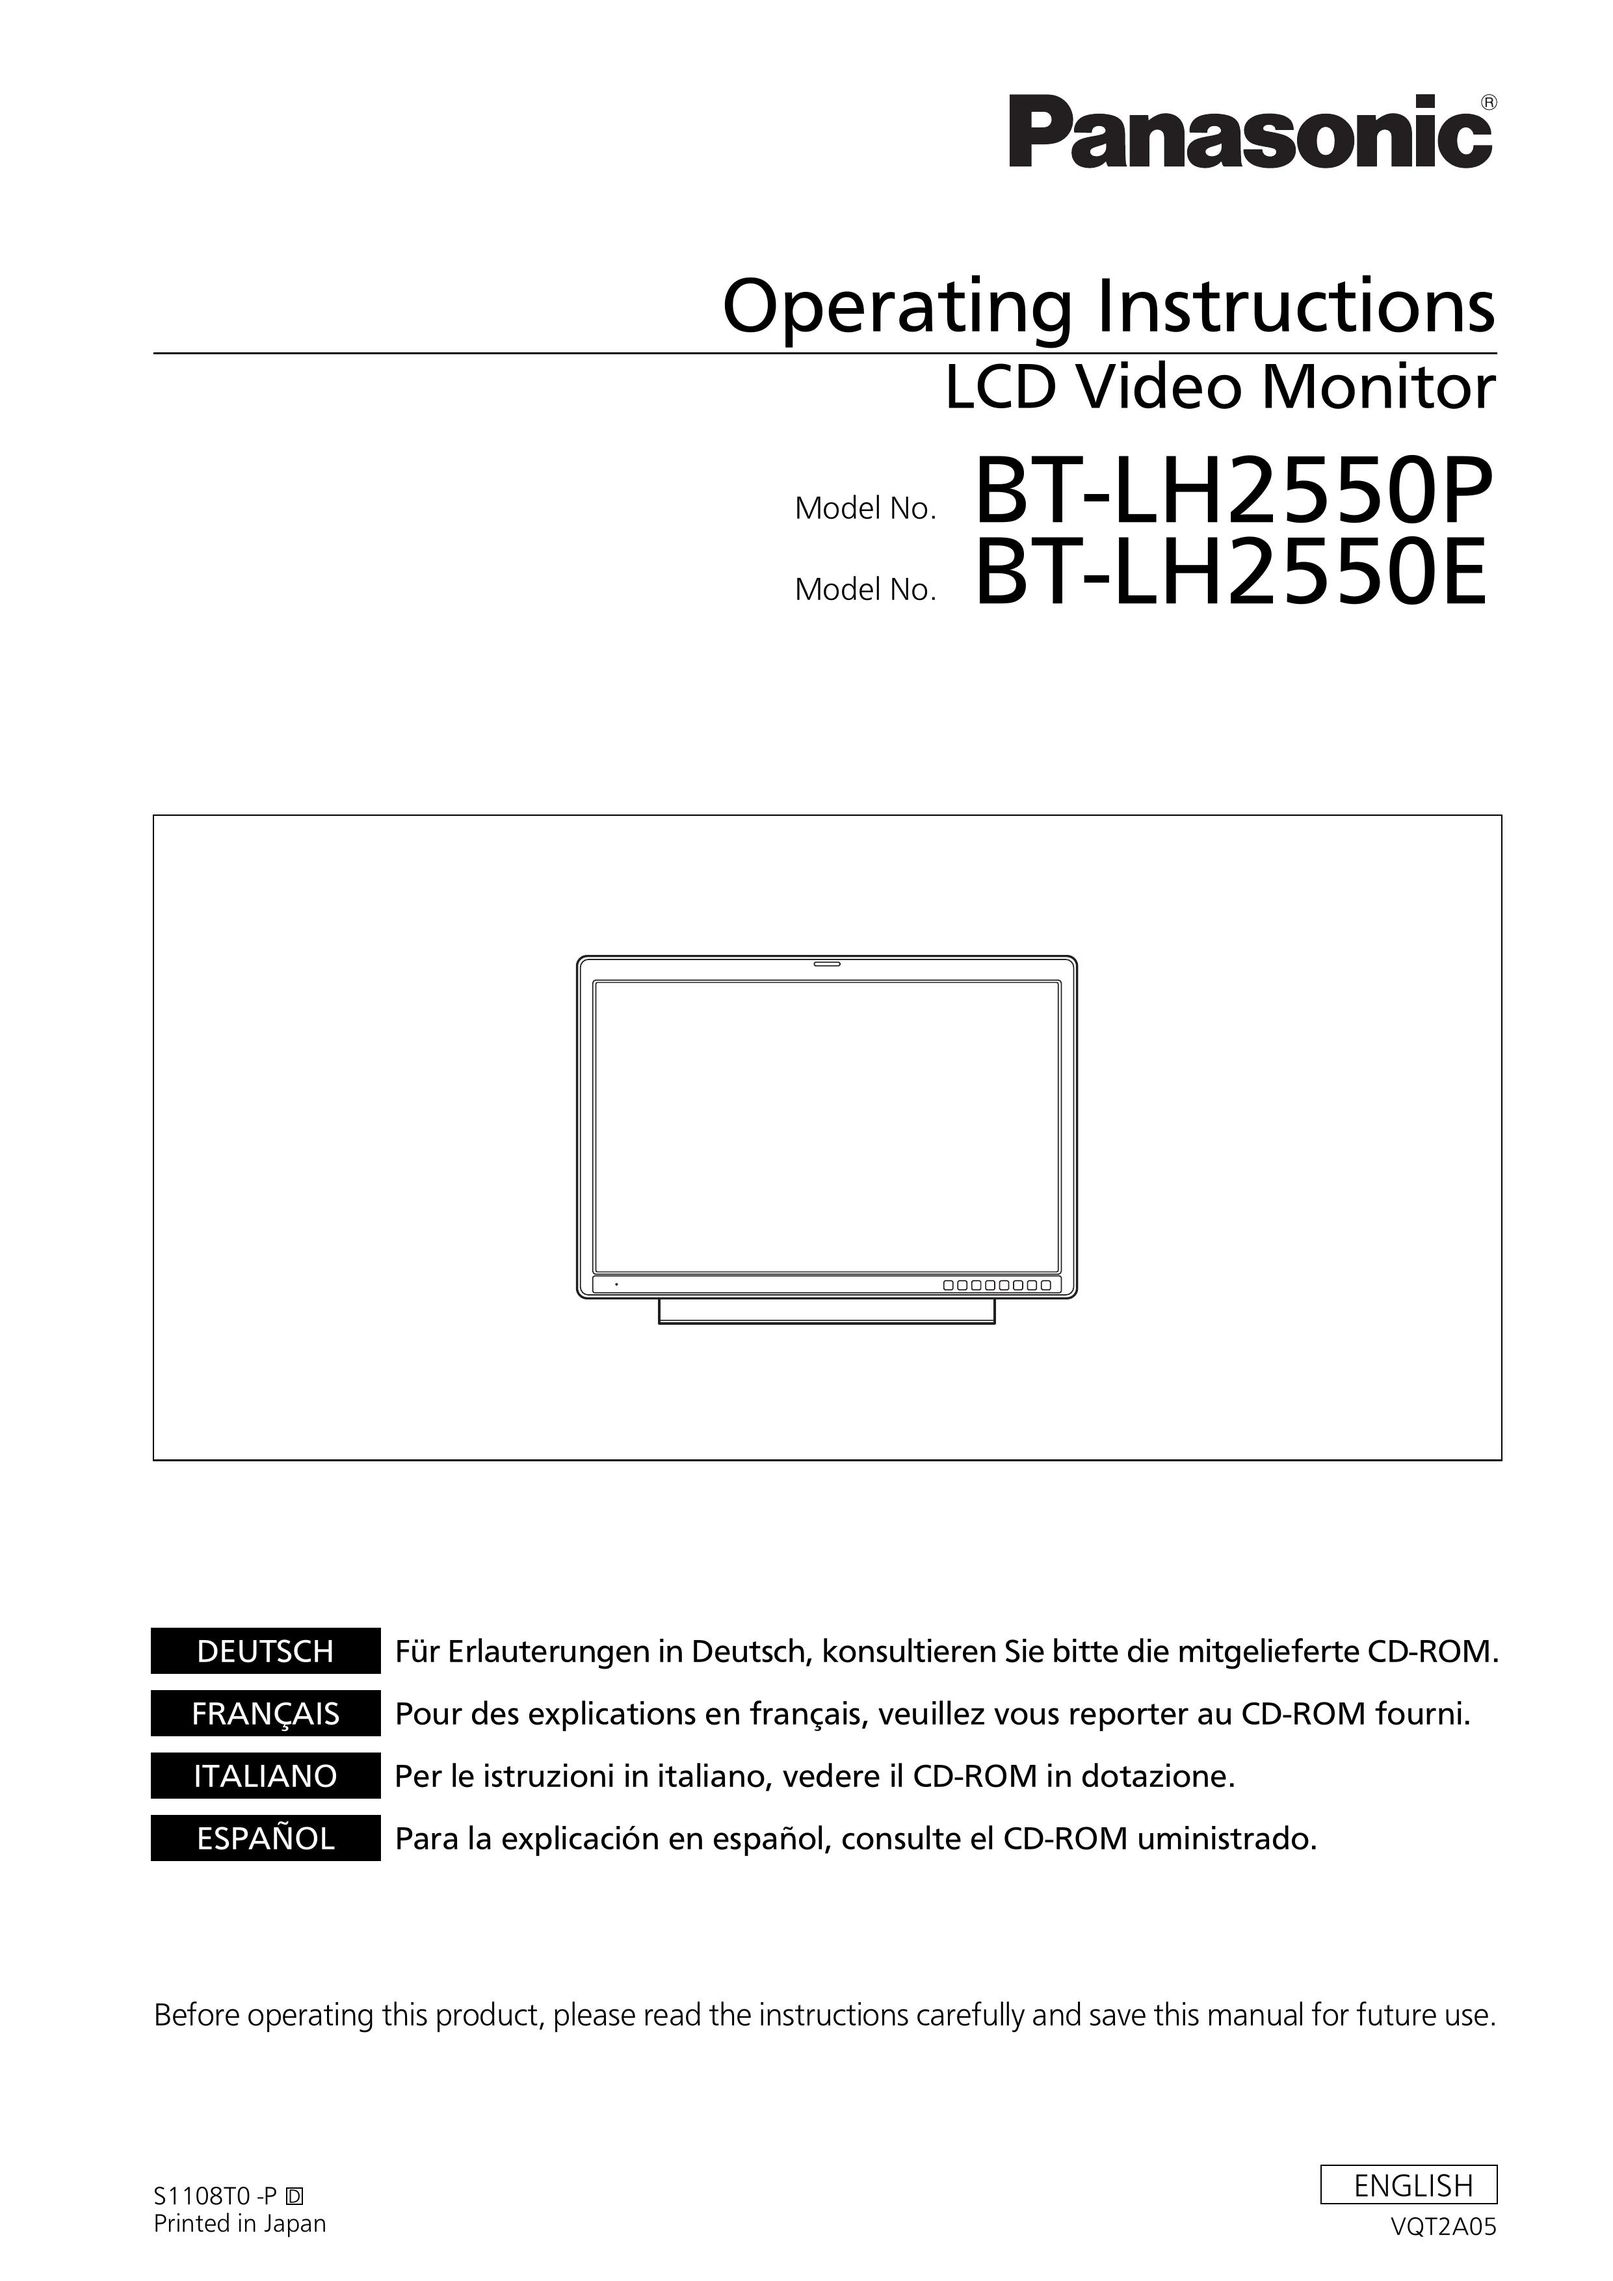 Panasonic BT-LH2550E Home Theater Screen User Manual